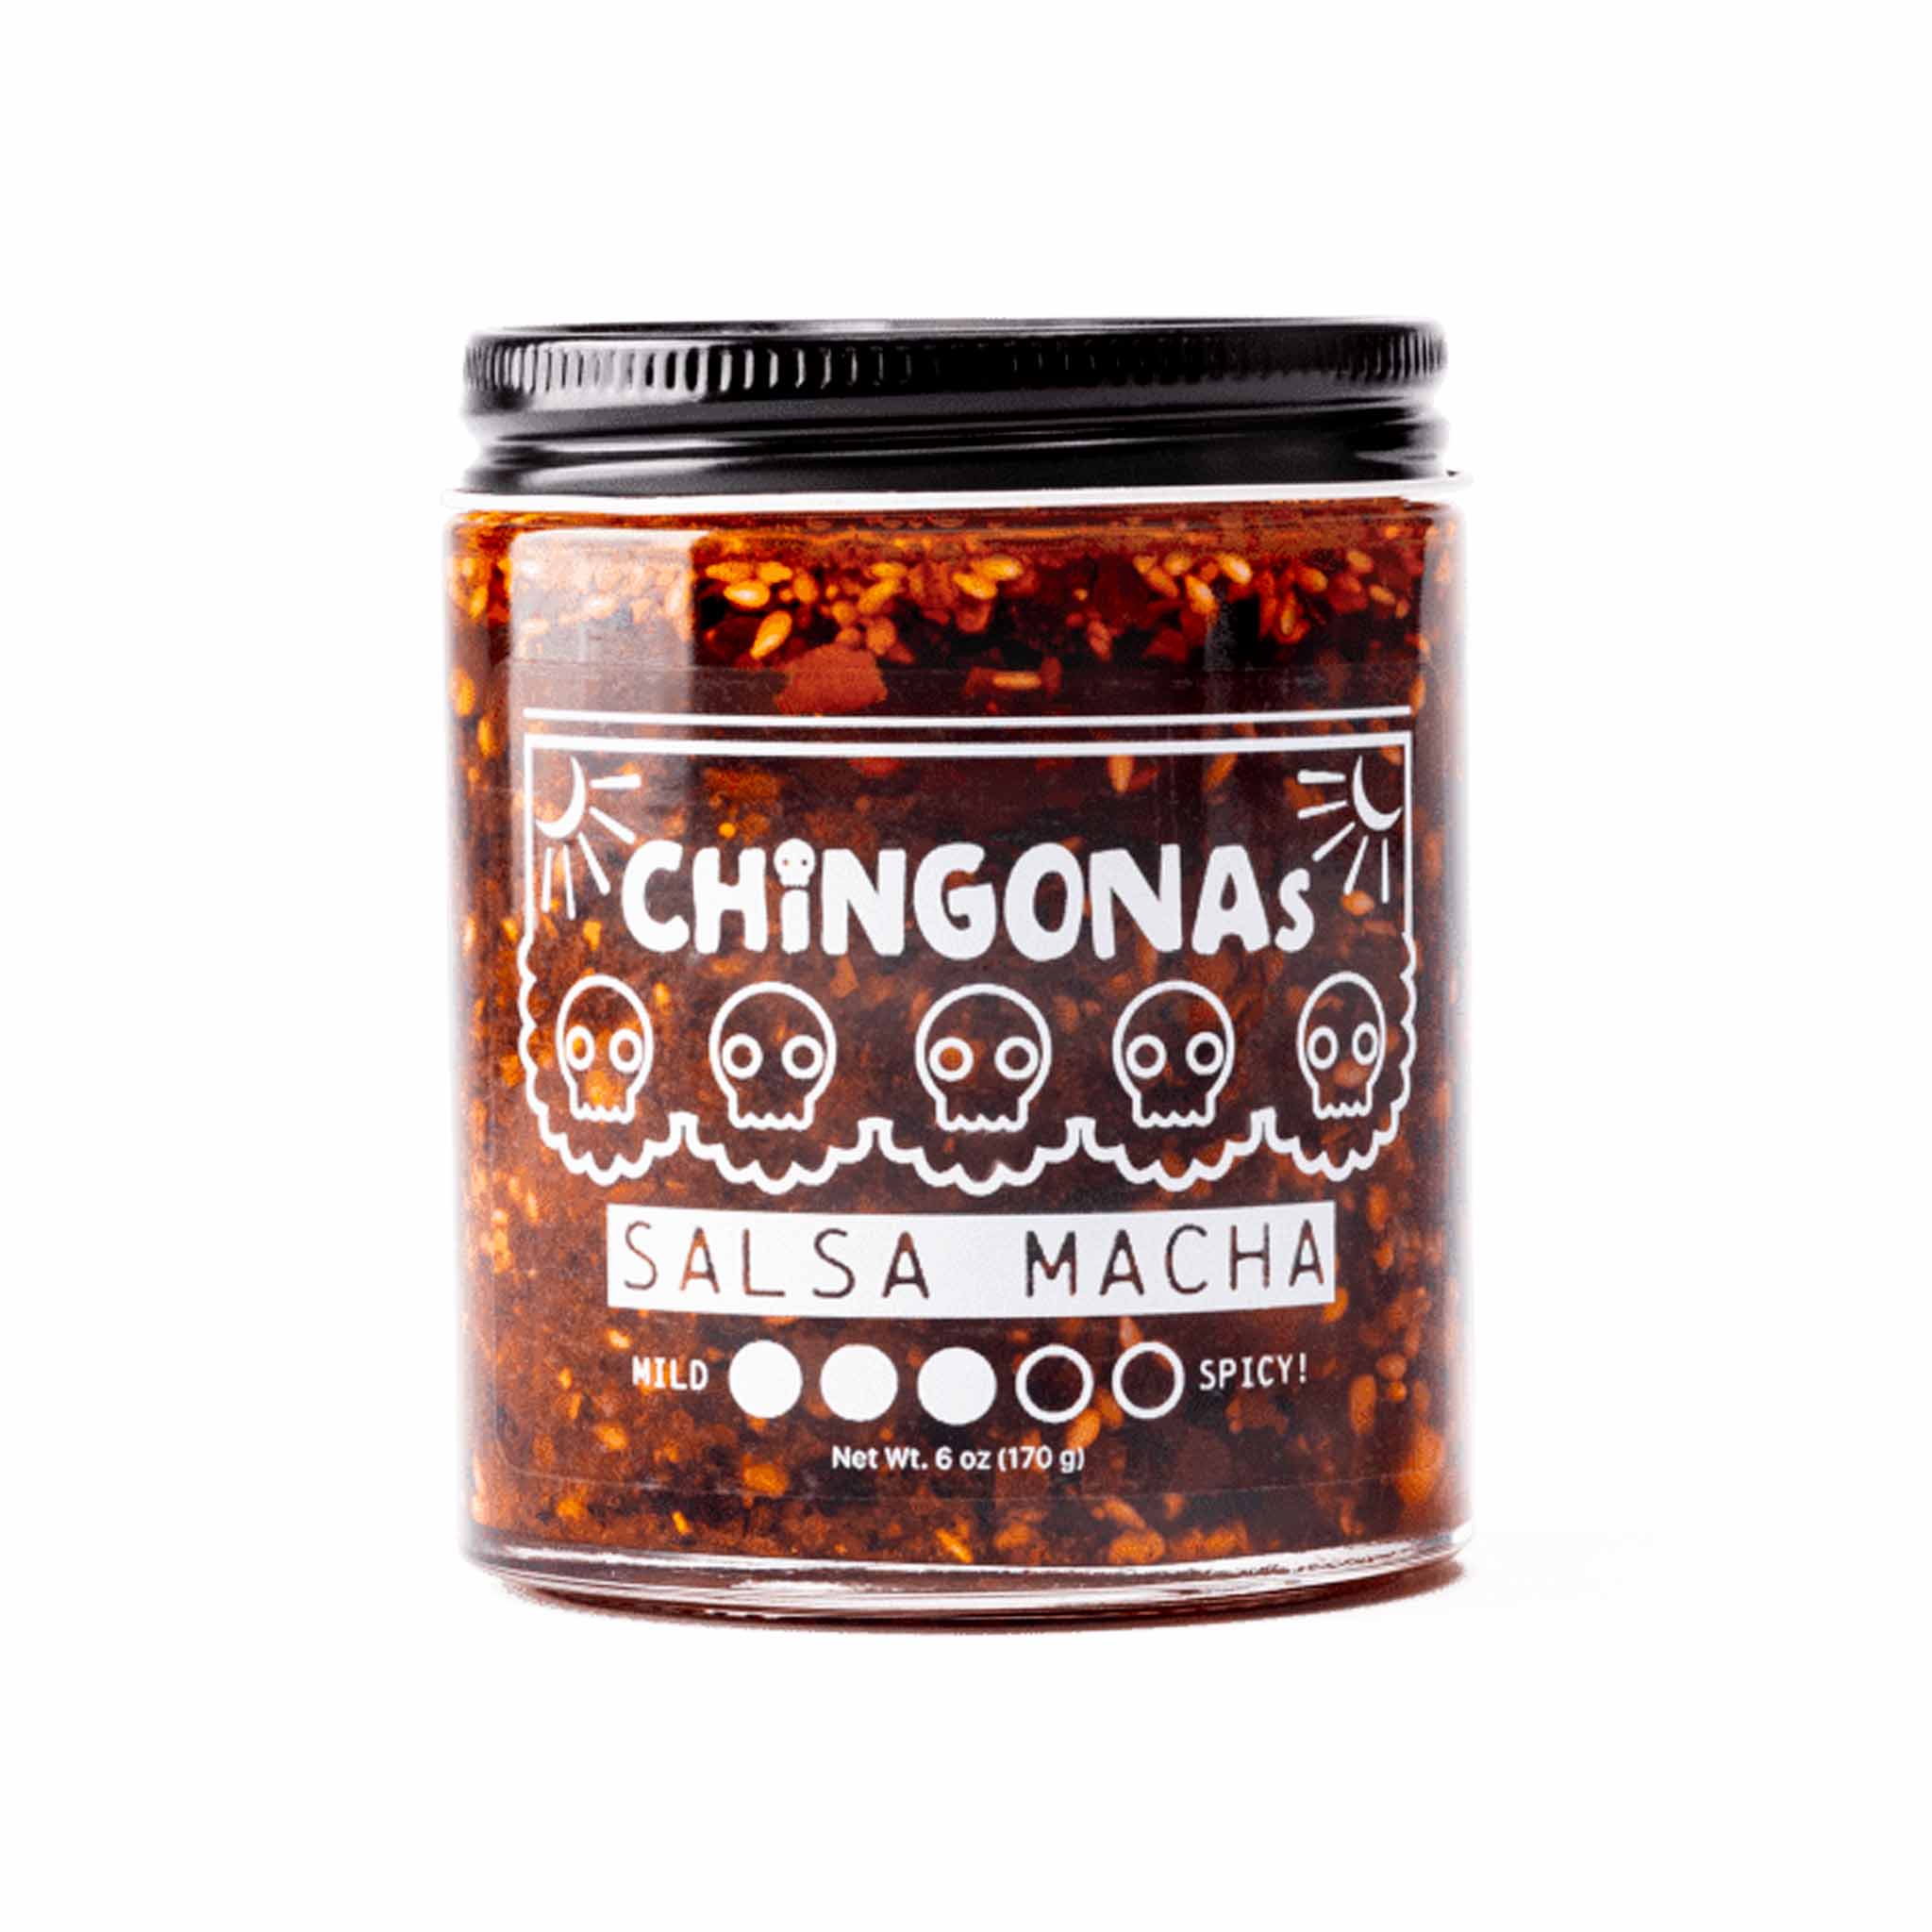 Chingonas Salsa Macha Mild Spicy Sauce in a Glass Jar